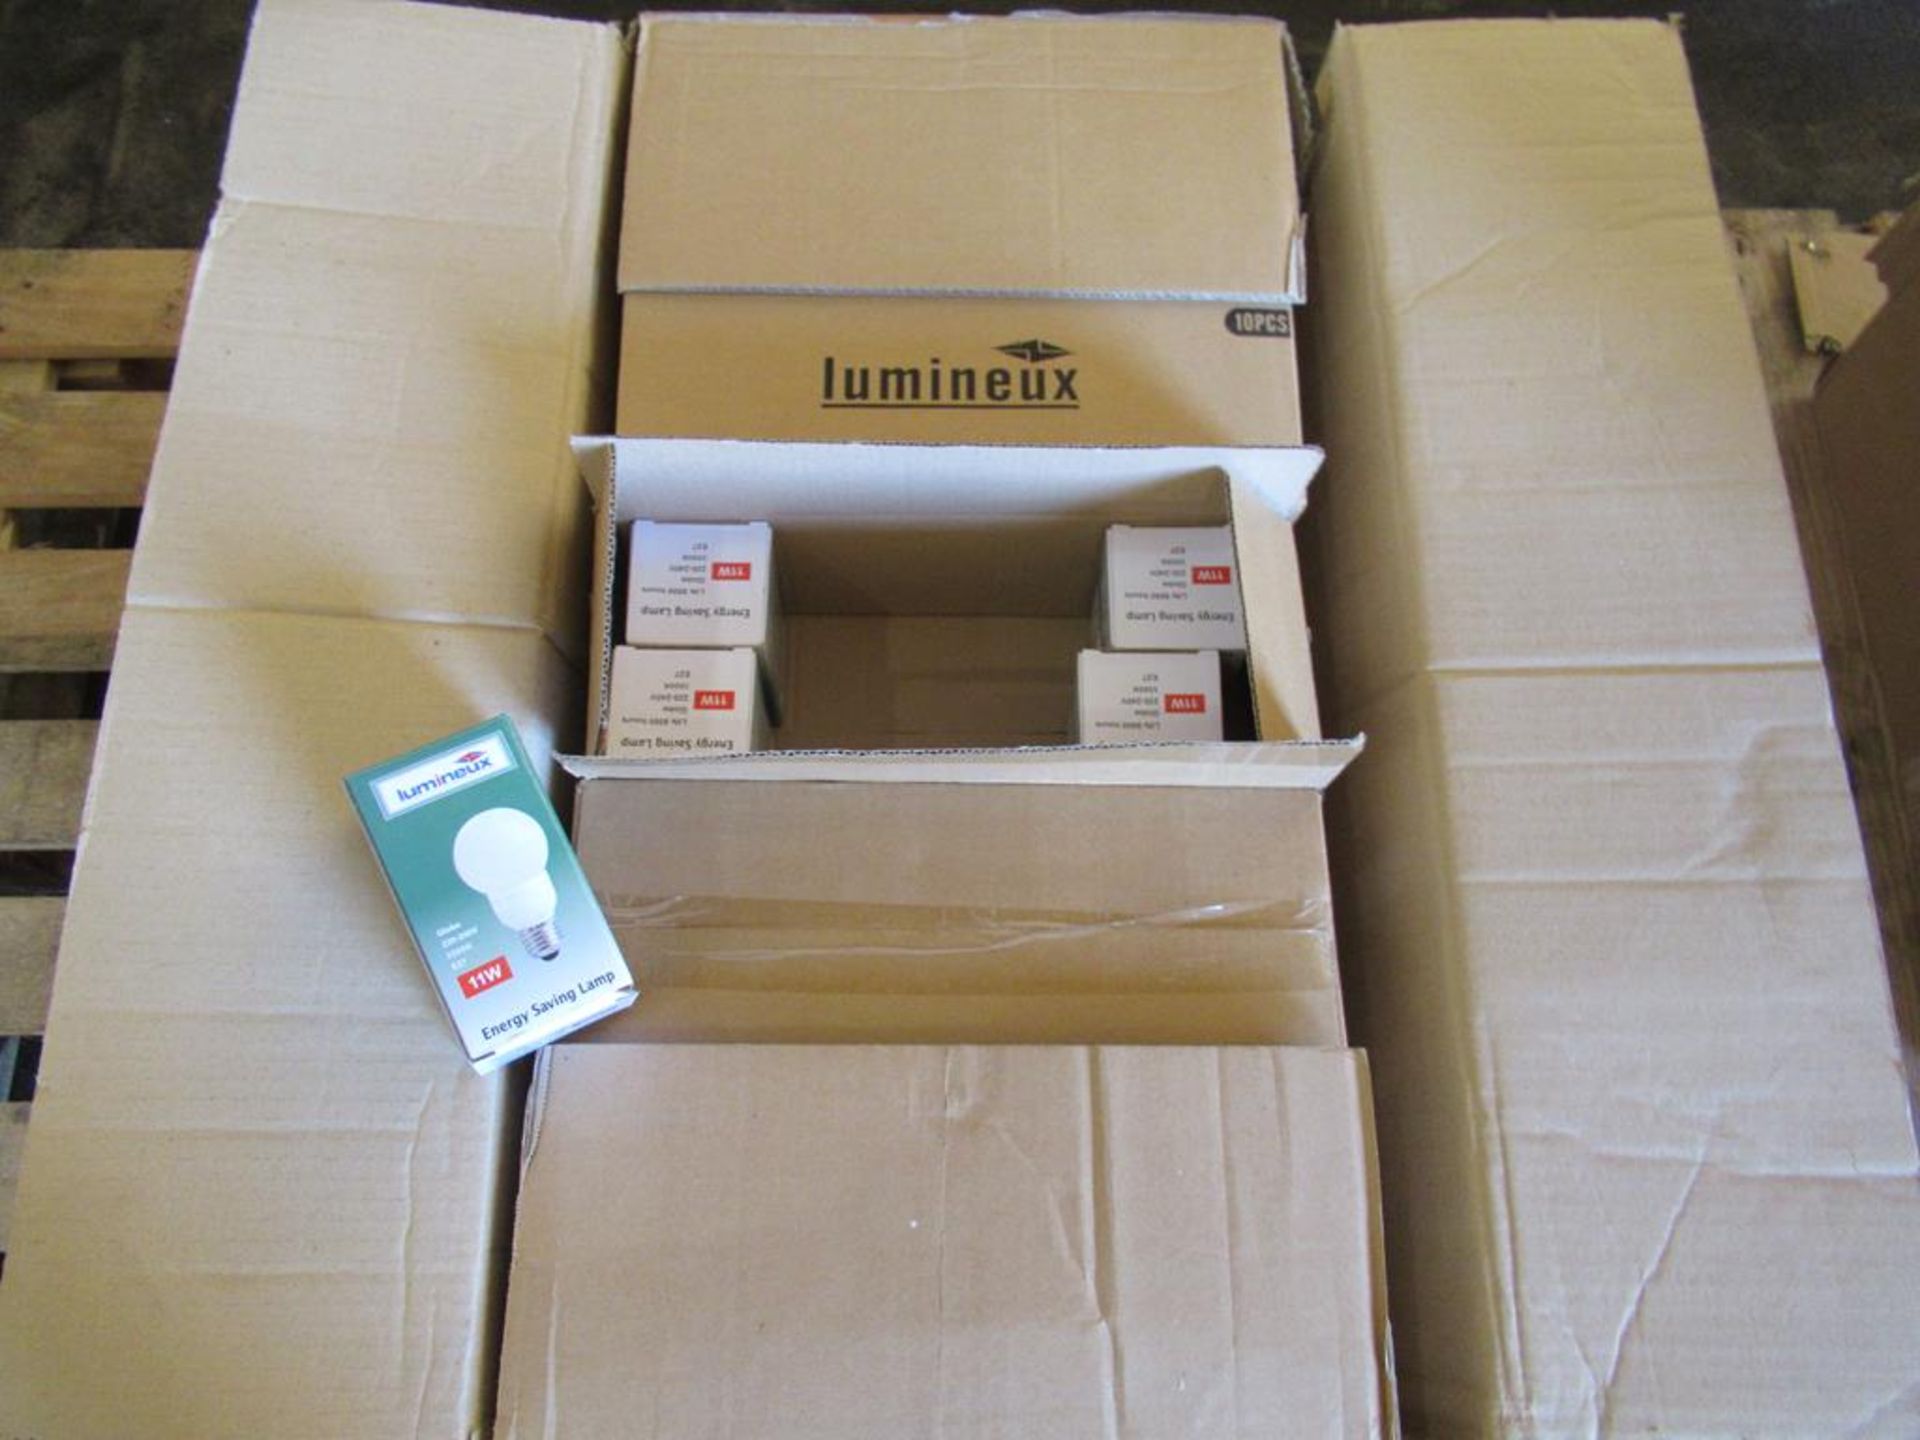 2x boxes of Lumineux Globe 11W E27 3500K 220-240V Energy Saving Bulbs (50pcs per box, 1 box contains - Image 5 of 5